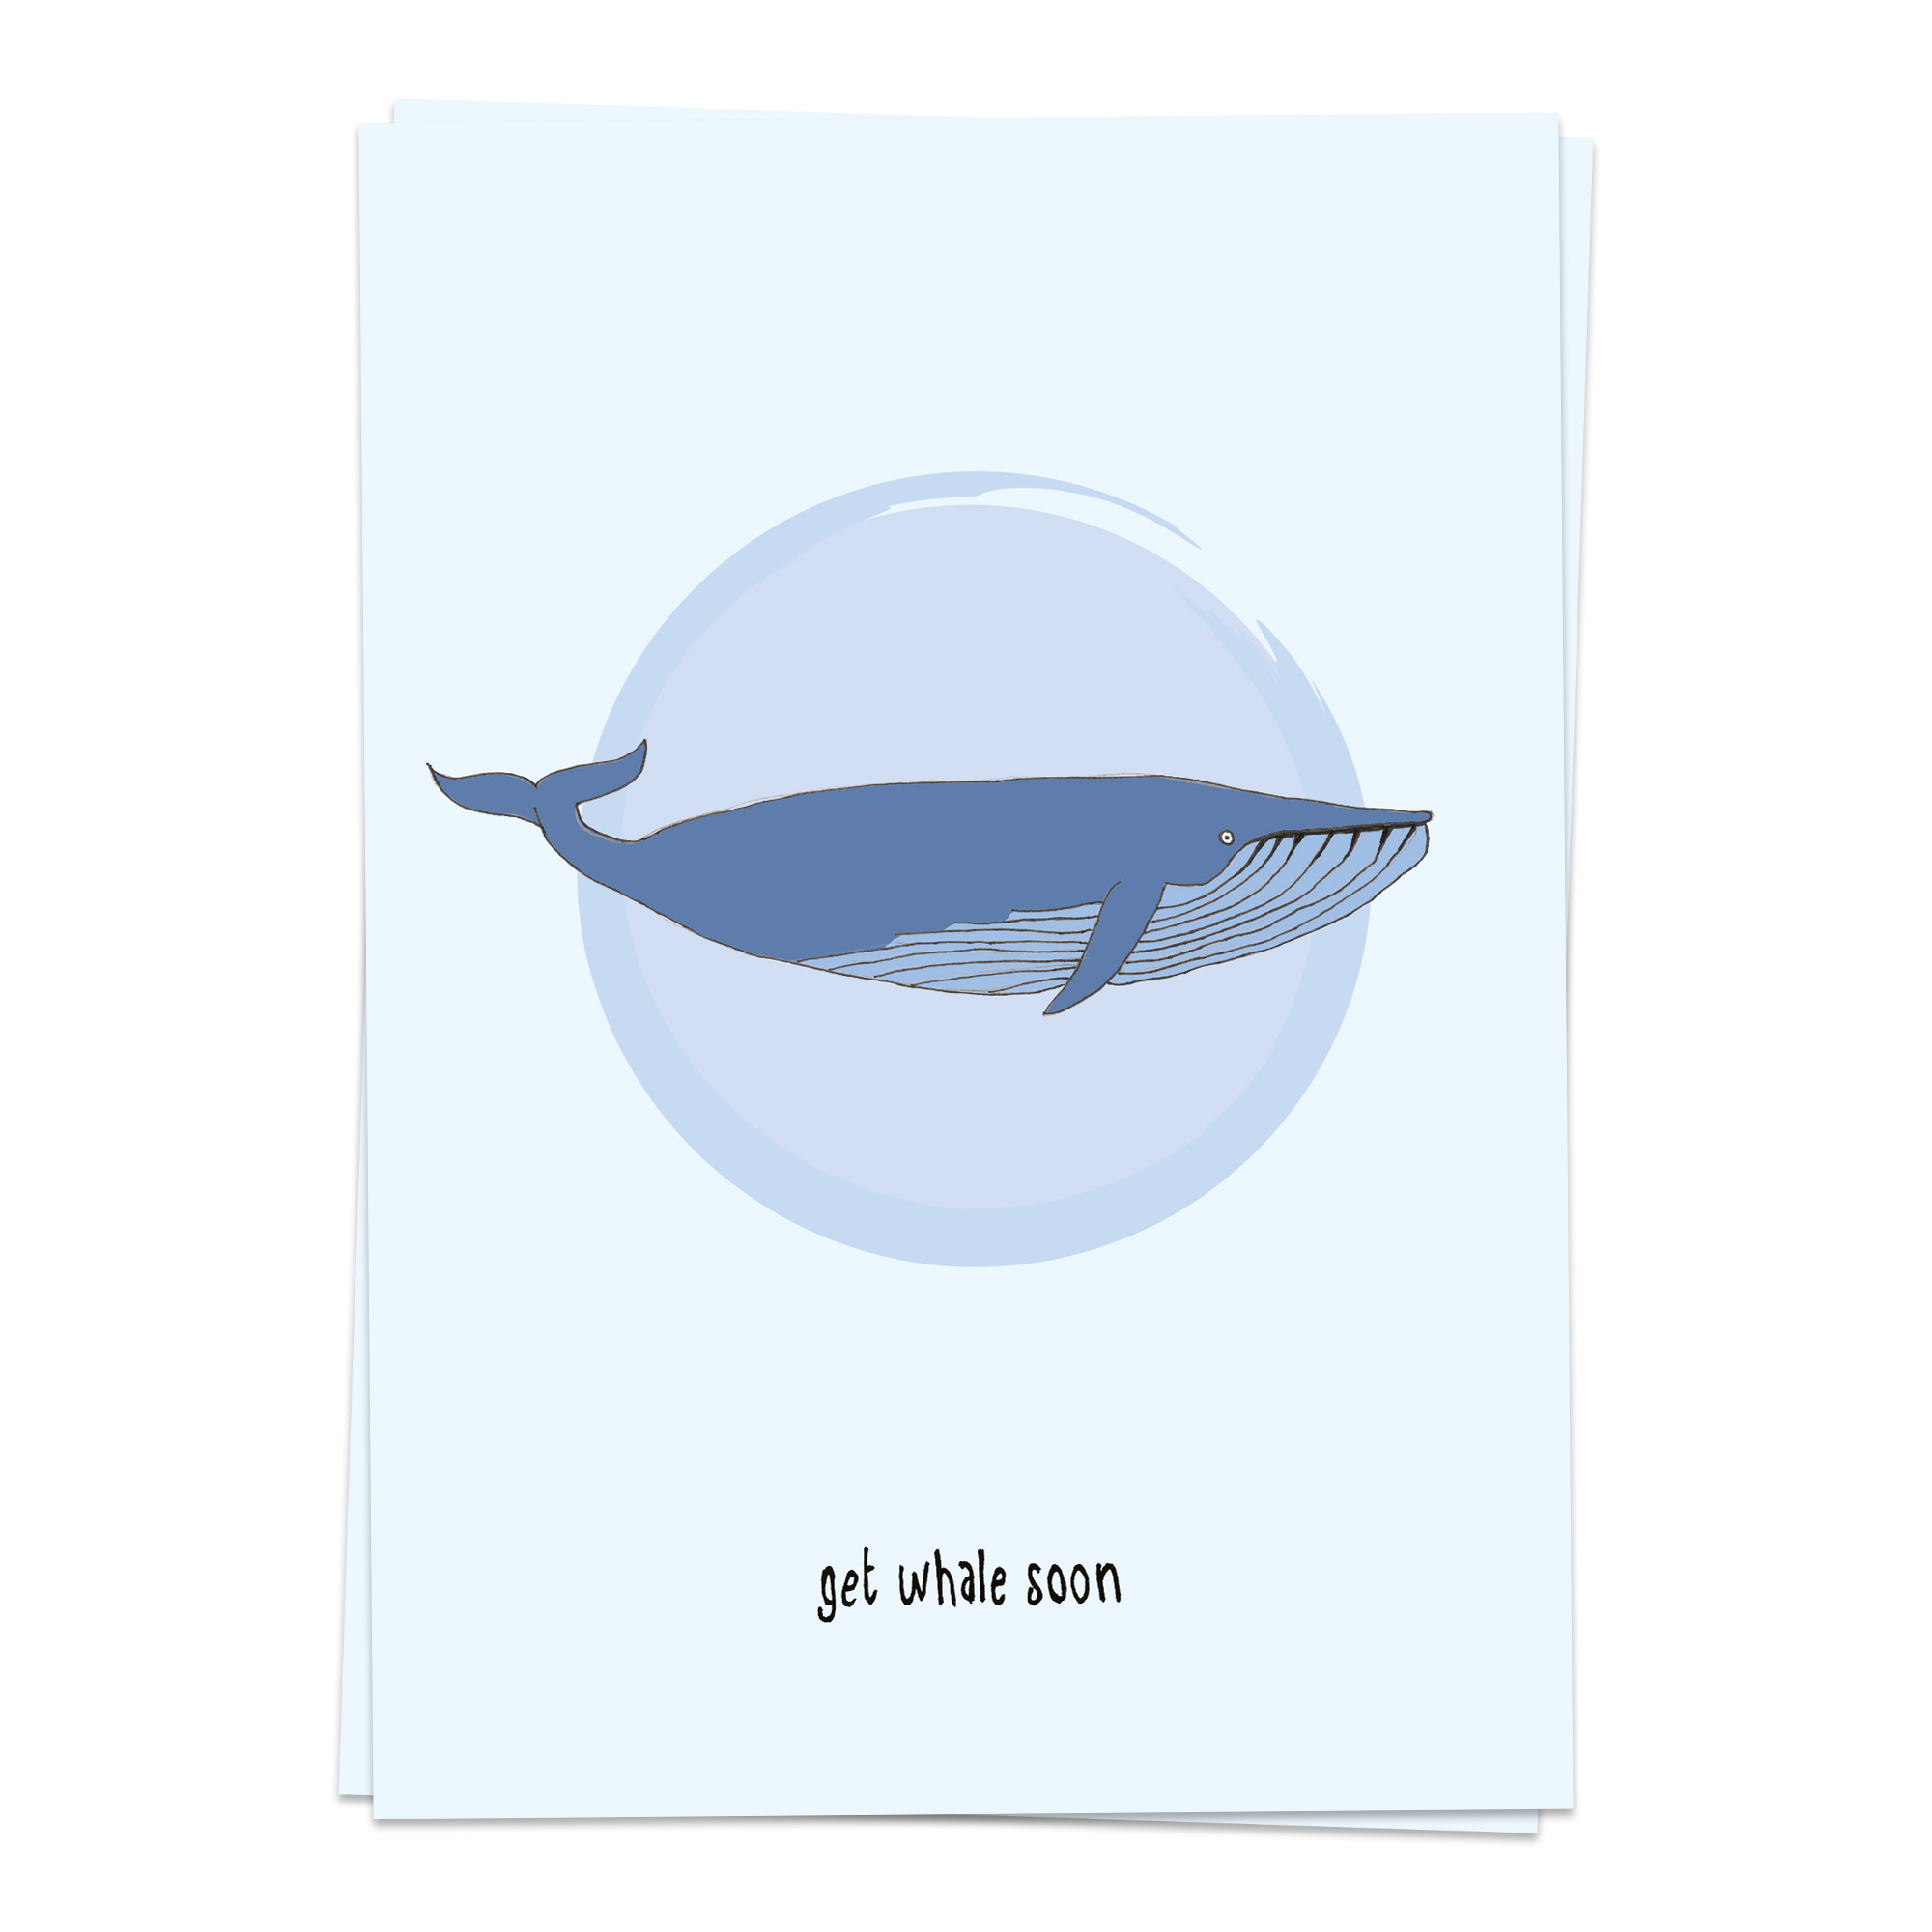 Cardimals – Get Whale Soon